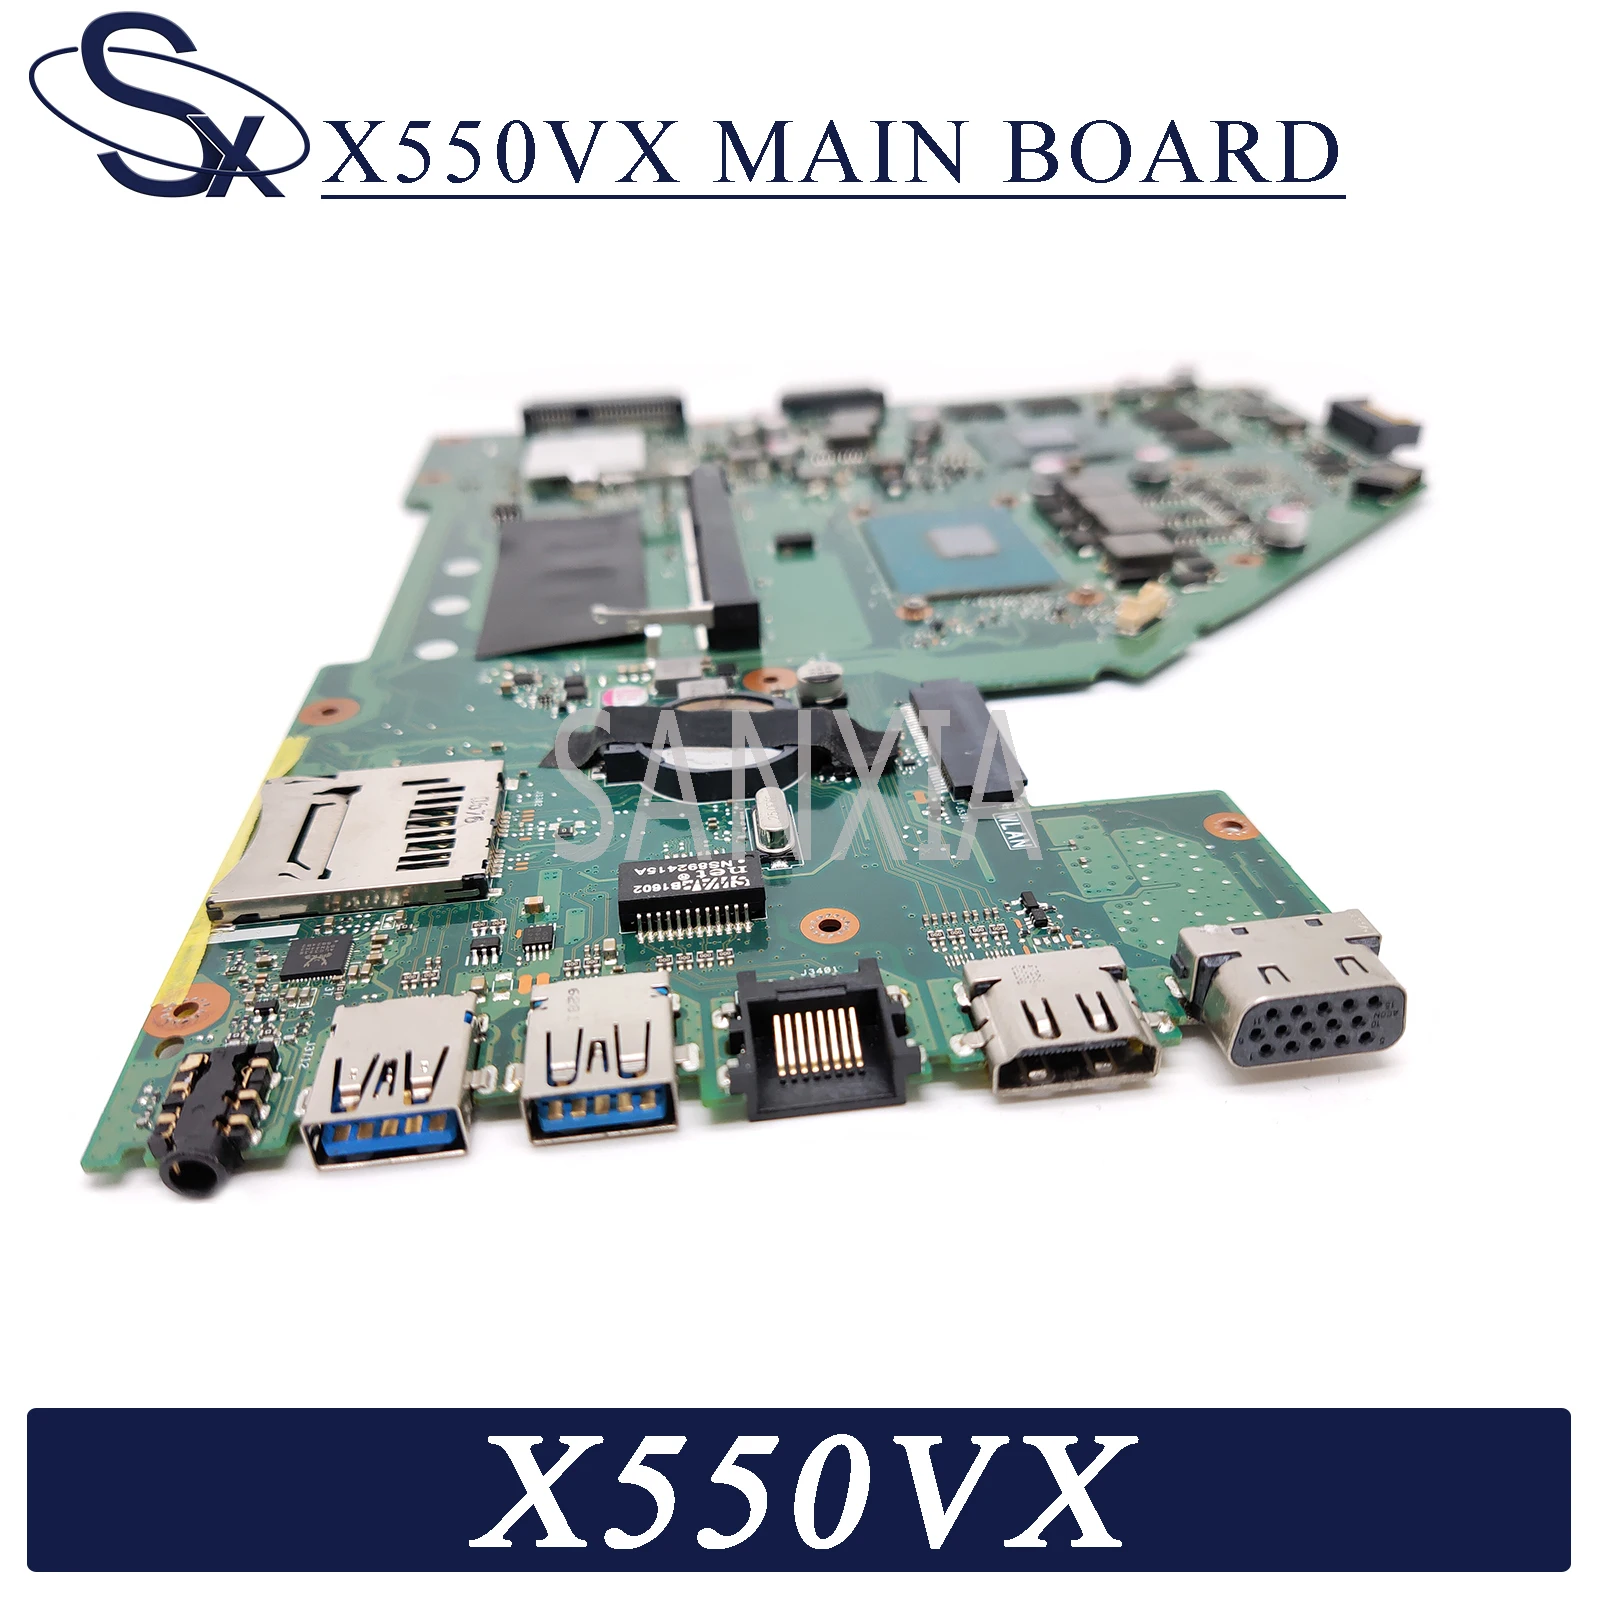 kefu x550vx laptop motherboard for asus x550vx x550v fh5900v original mainboard 8gb ram i7 6700hq gtx950m free global shipping